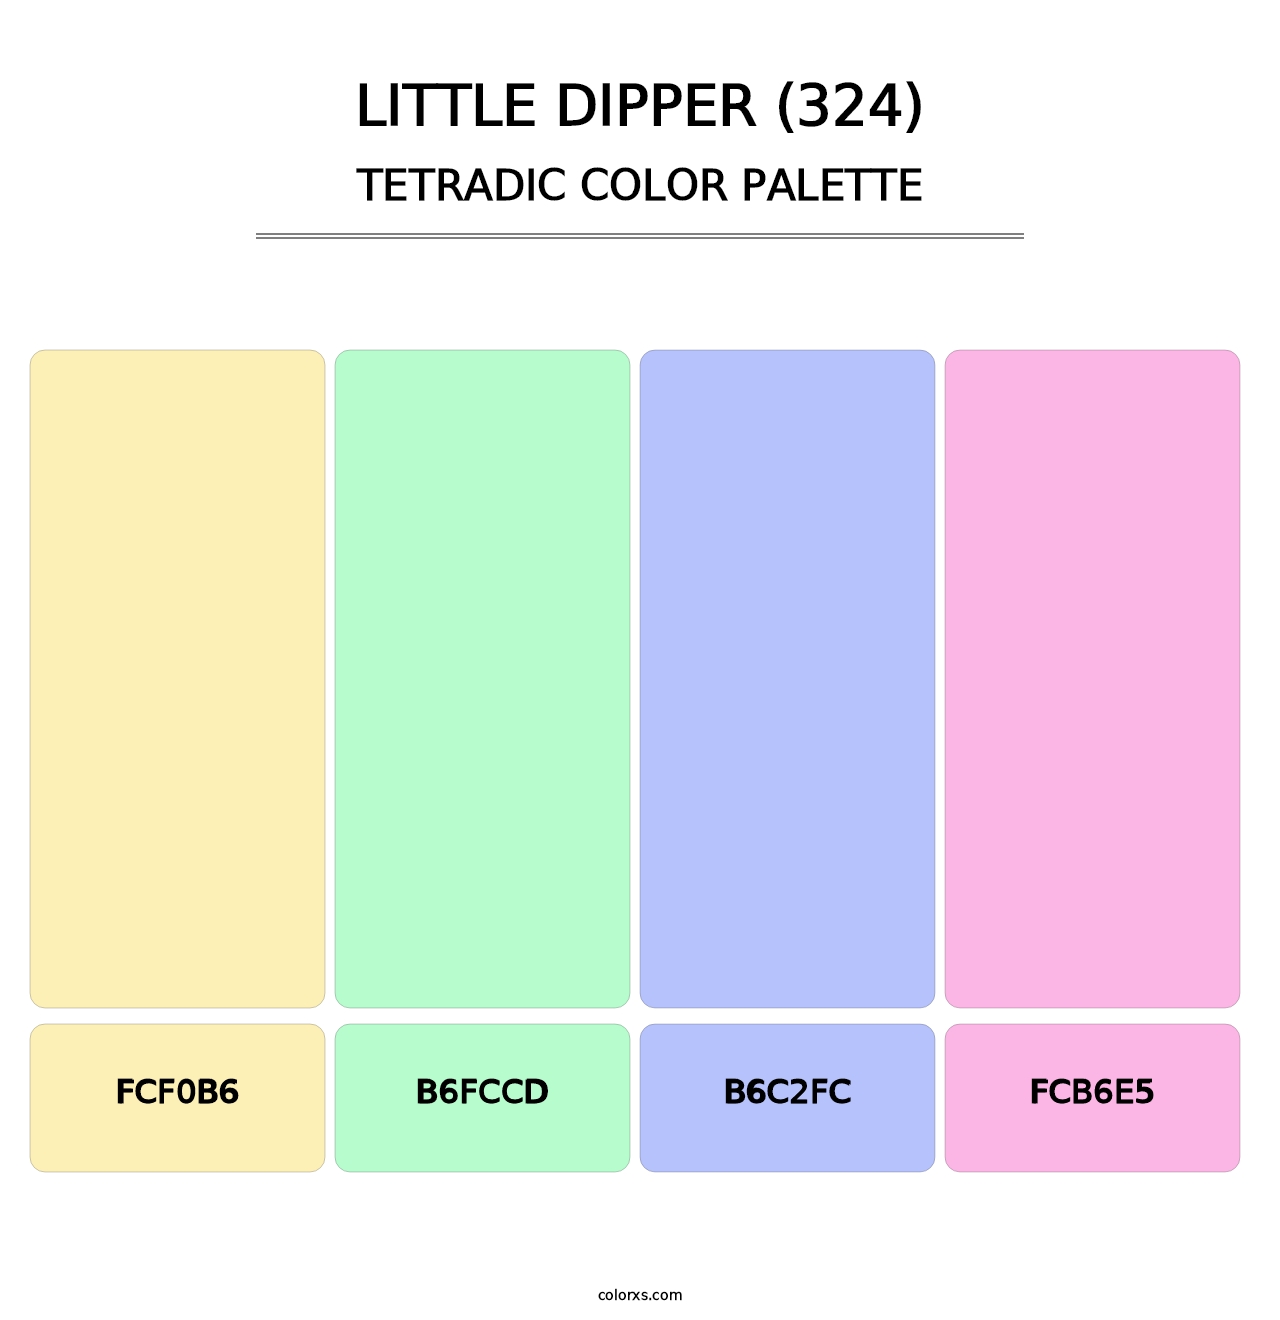 Little Dipper (324) - Tetradic Color Palette